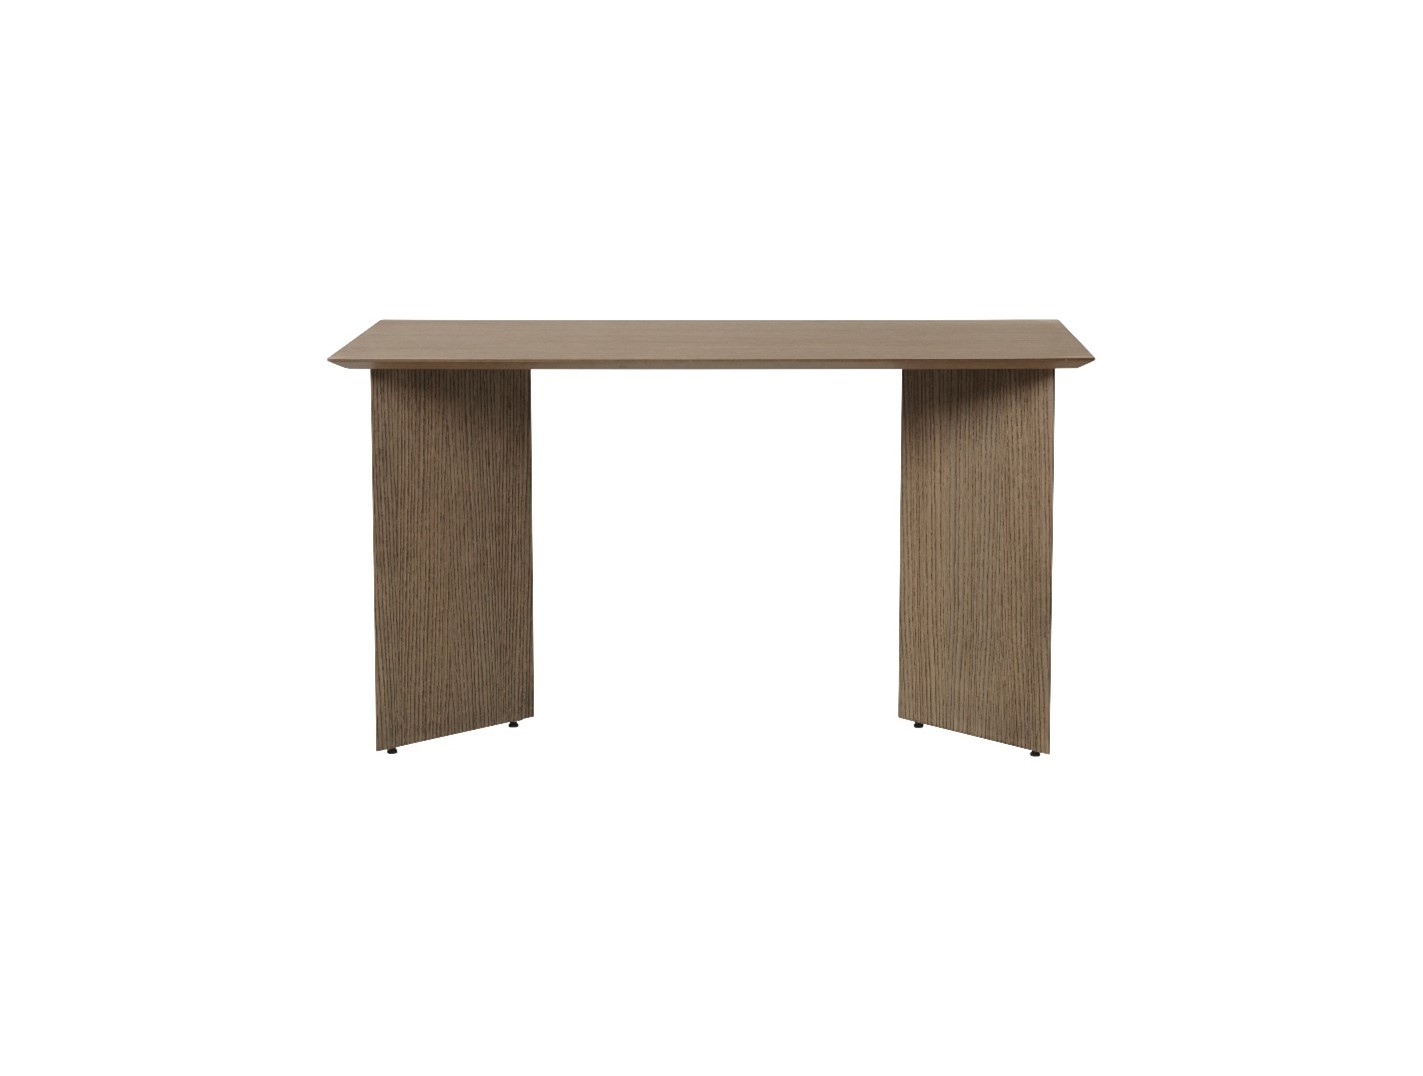 Desk in oak wood - Dimensions : L 210 x W 90 x H 2.5 cm - Price : Unavailable